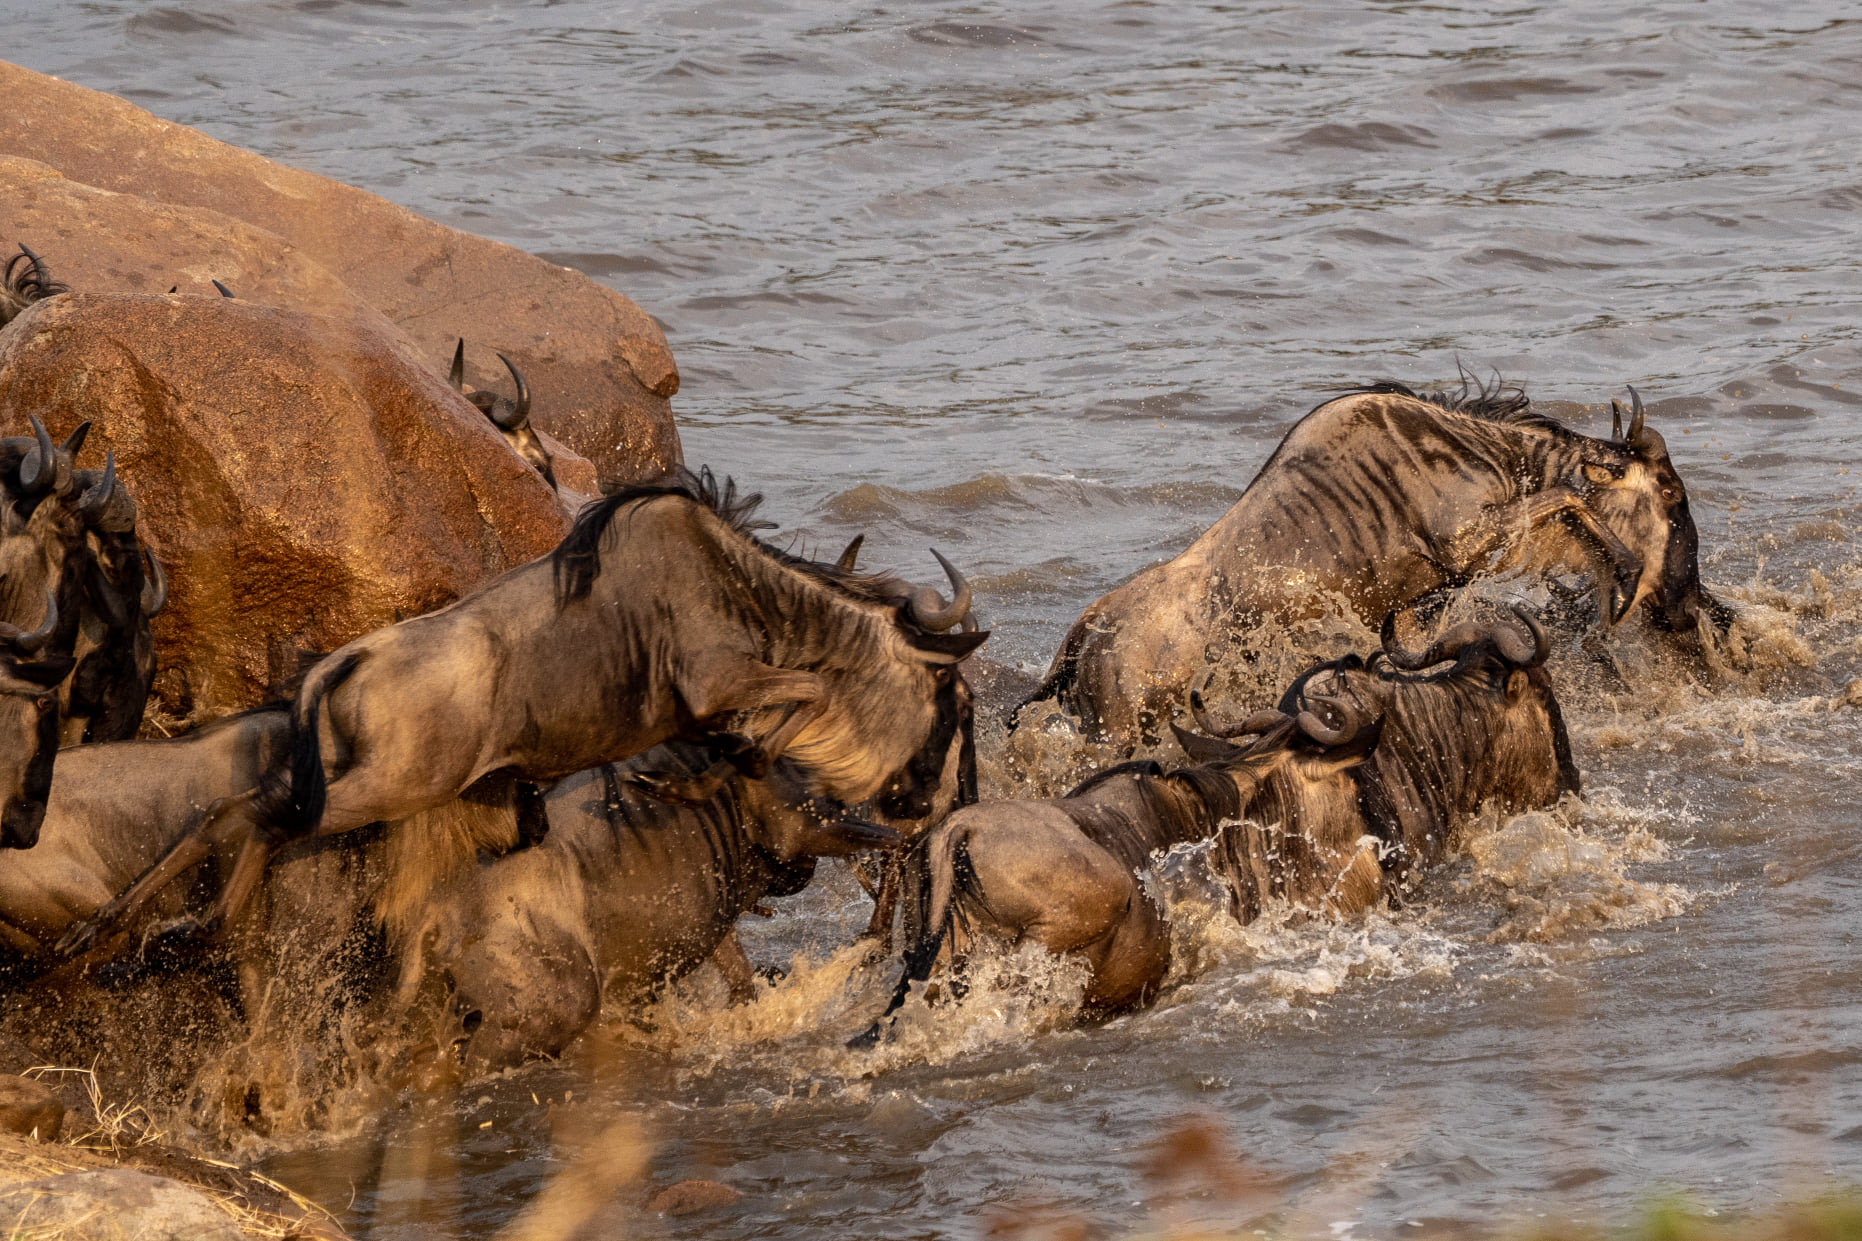 Serengeti National Park rules and regulations in Tanzania